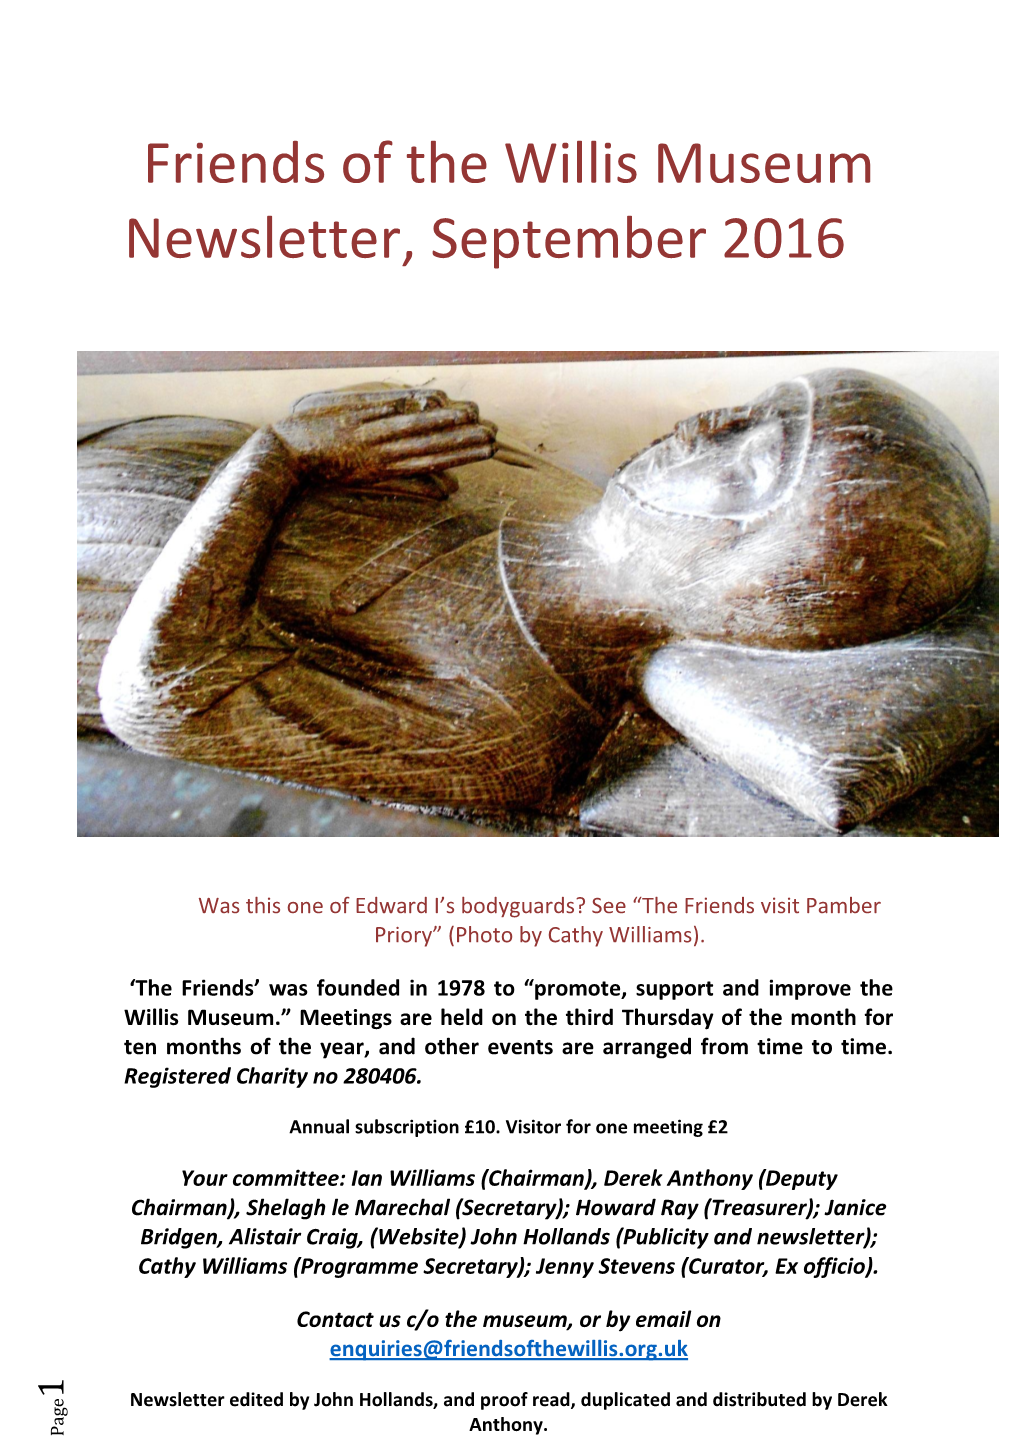 Friends of the Willis Museum Newsletter, September 2016